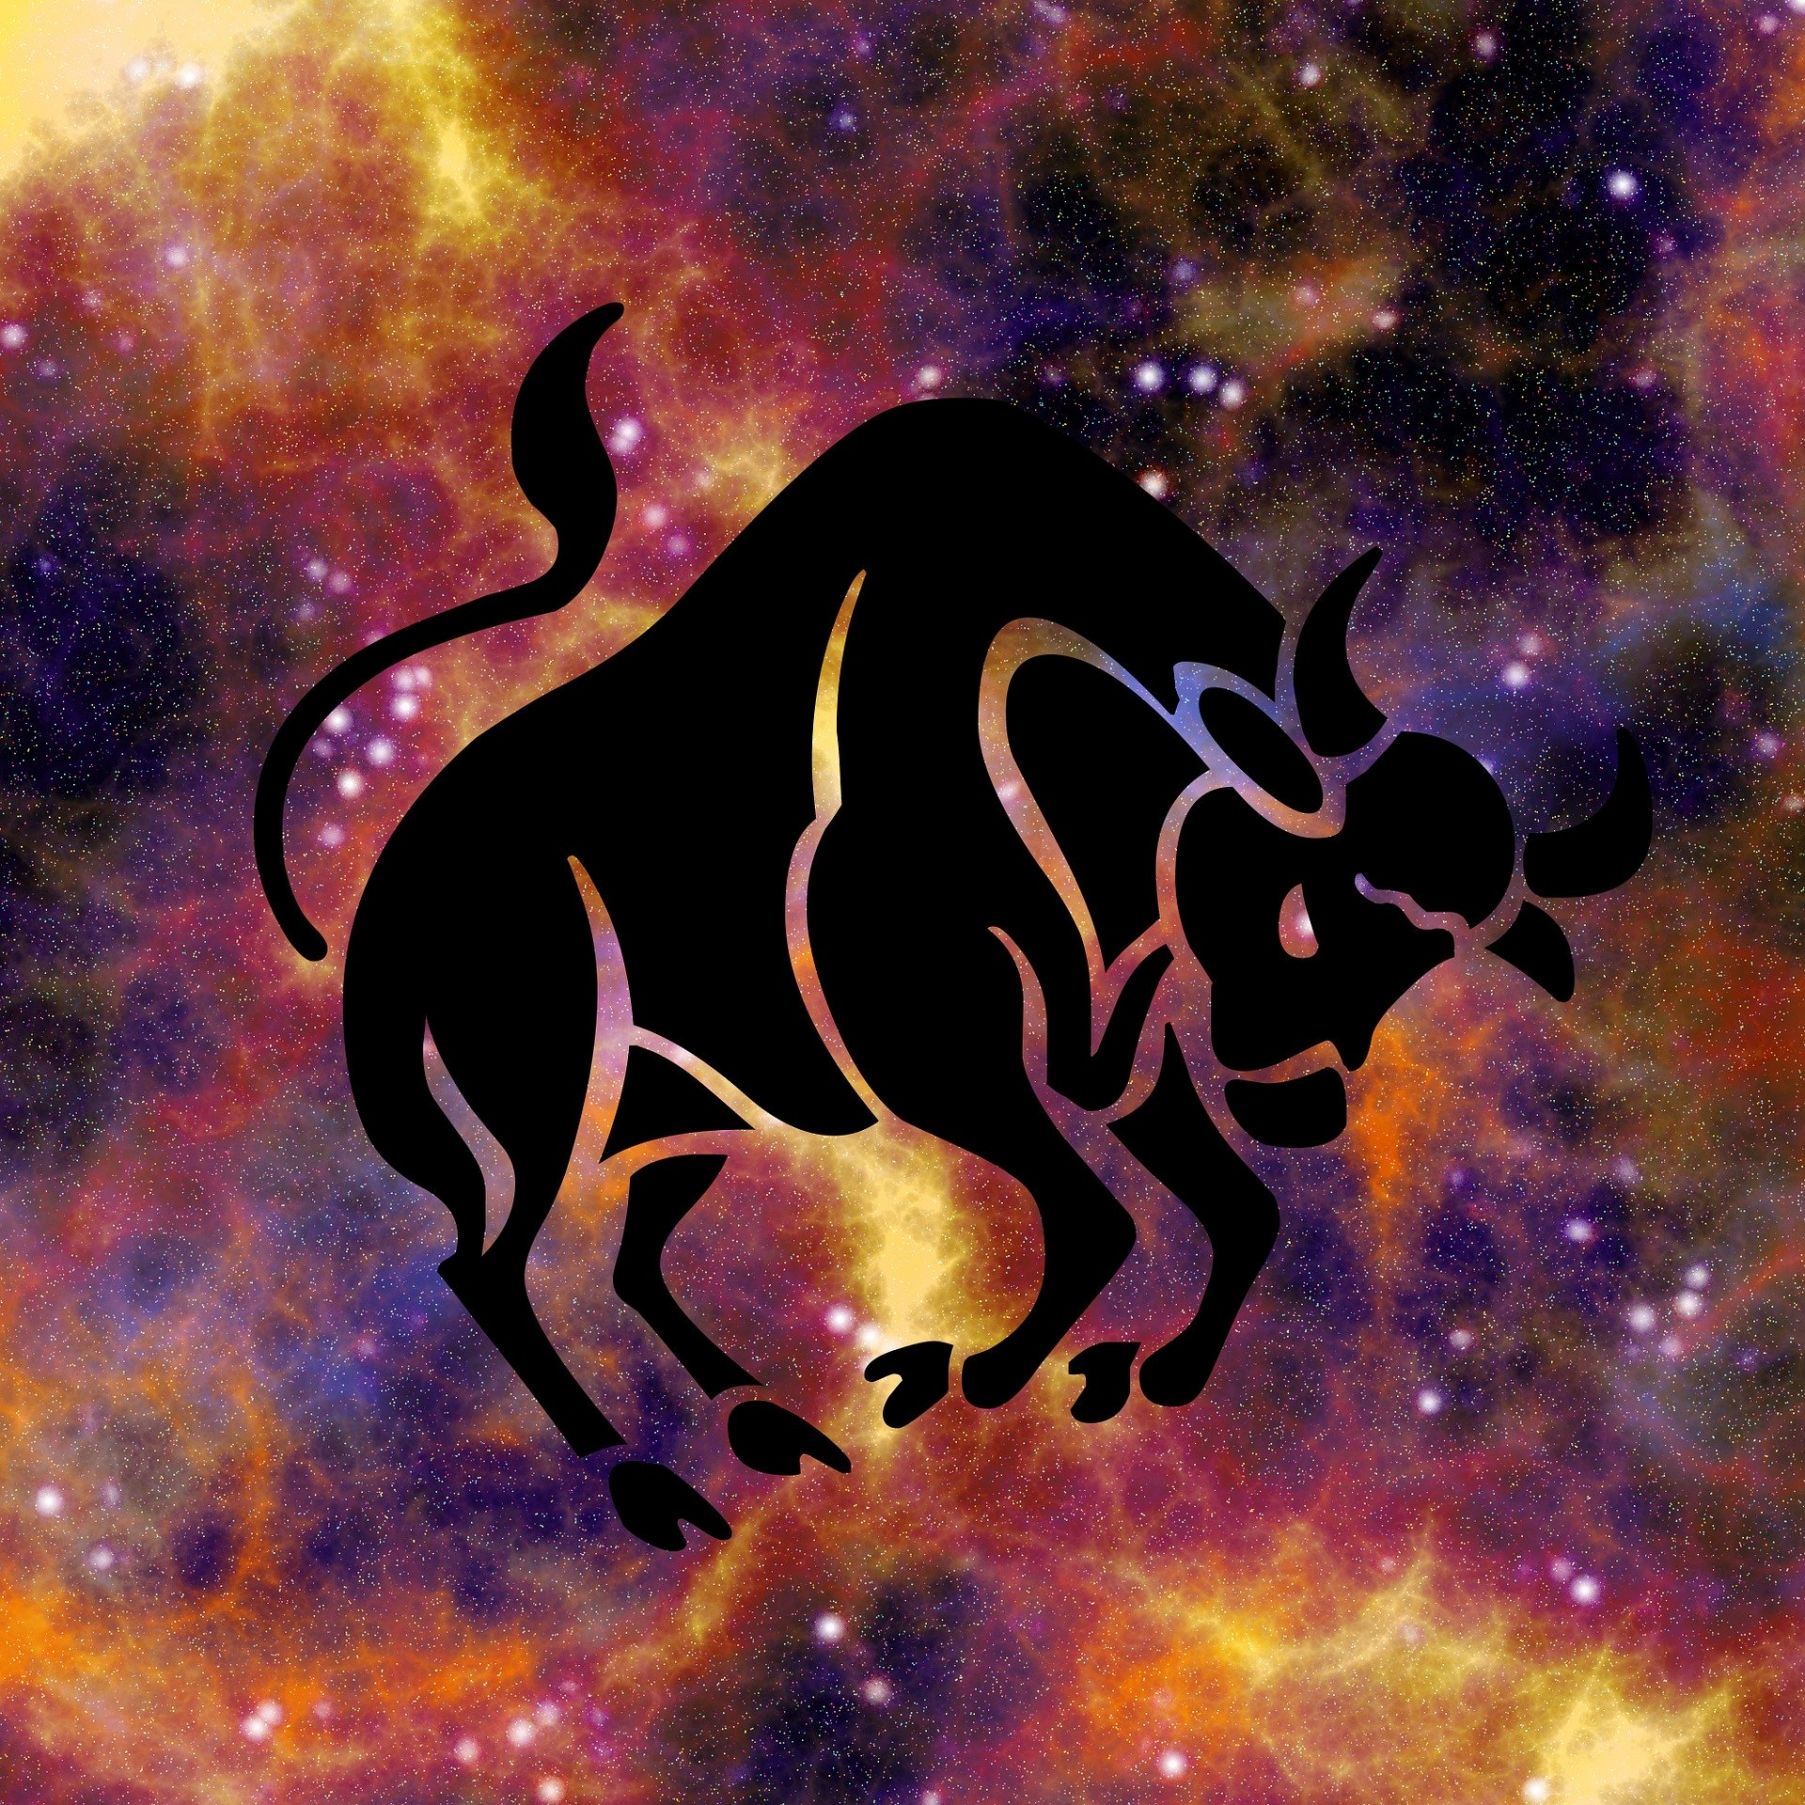 Darmowy horoskop na  kwiecien 2018